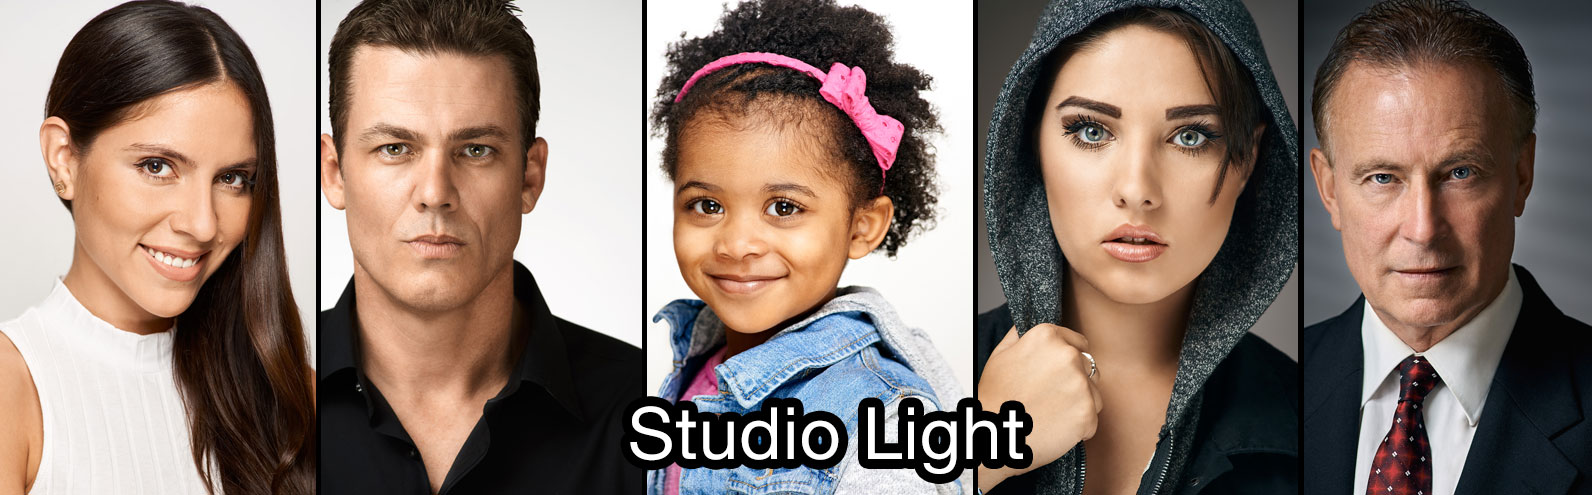 Sample of Studio Light Actor Headshots